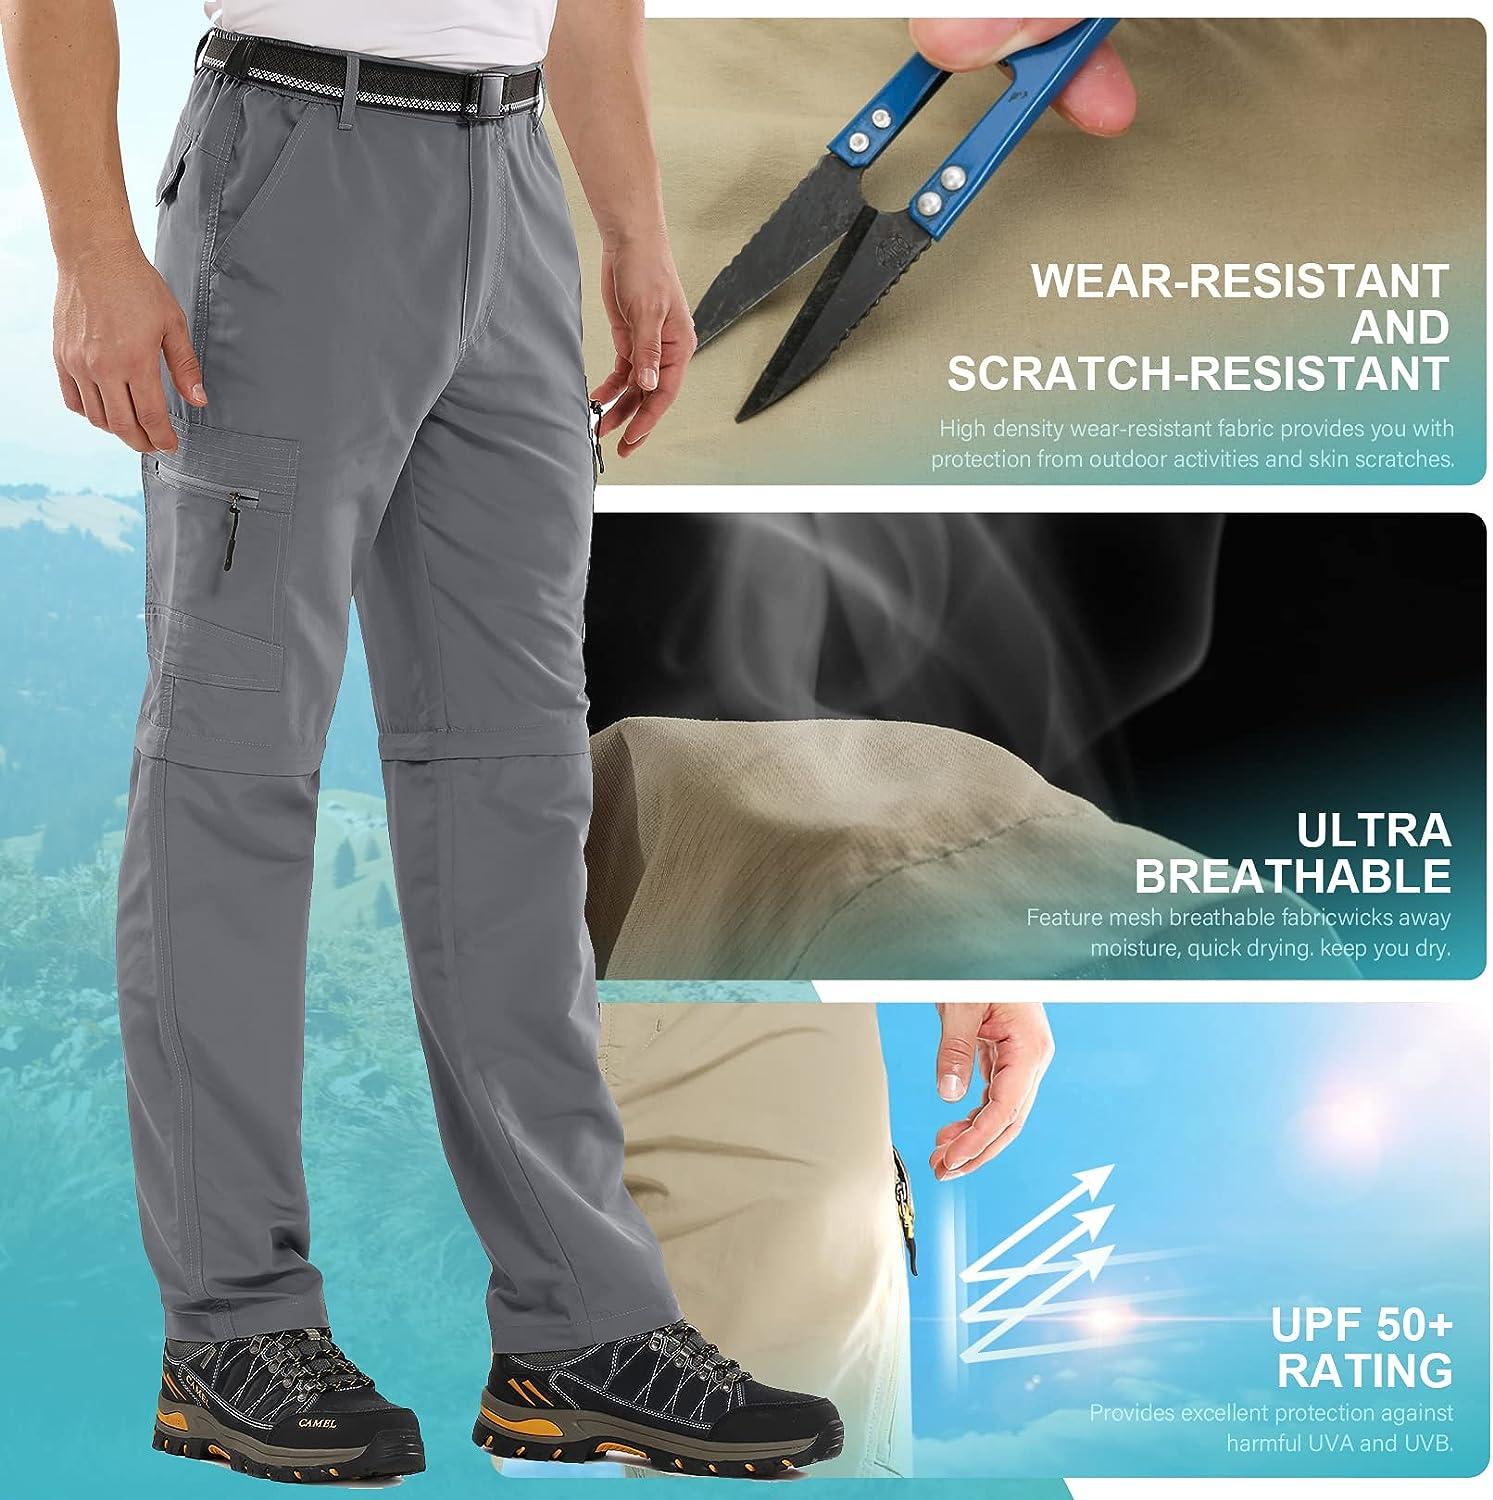 Mens Hiking Pants Convertible boy Scout Zip Off Shorts Lightweight Quick Dry  Breathable Fishing Safari Pants 34 1 Grey